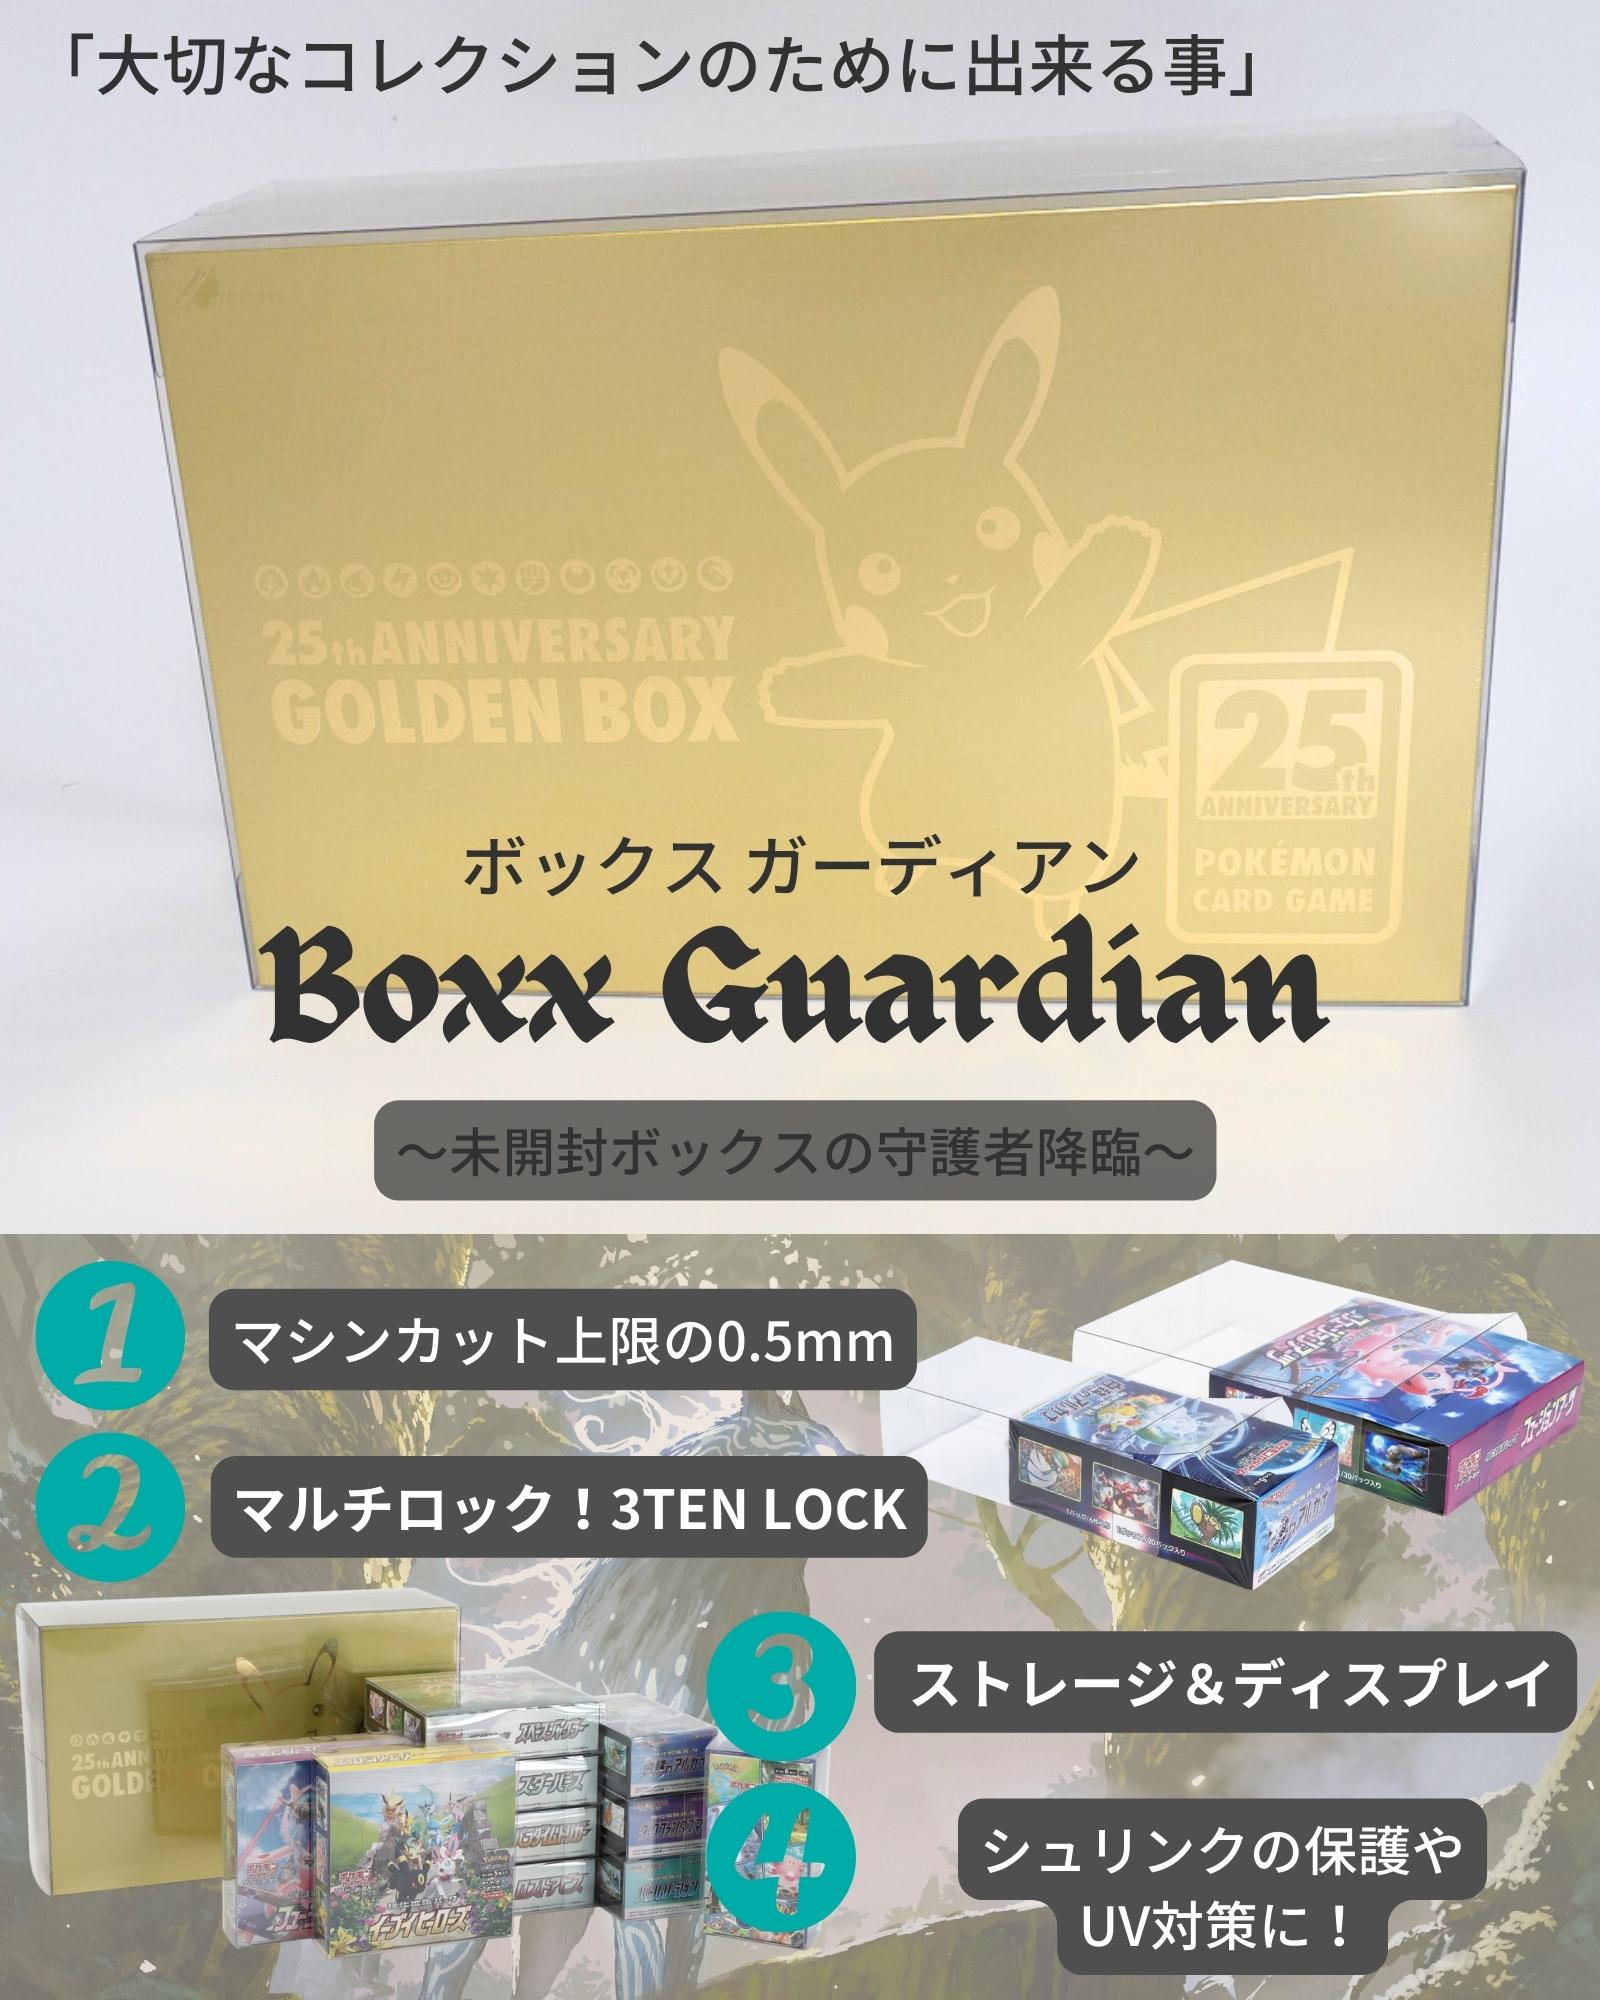 Boxx Guardian ポケモンカードBOX用 25th ANNIVERSARY GOLDEN BOX サイズ